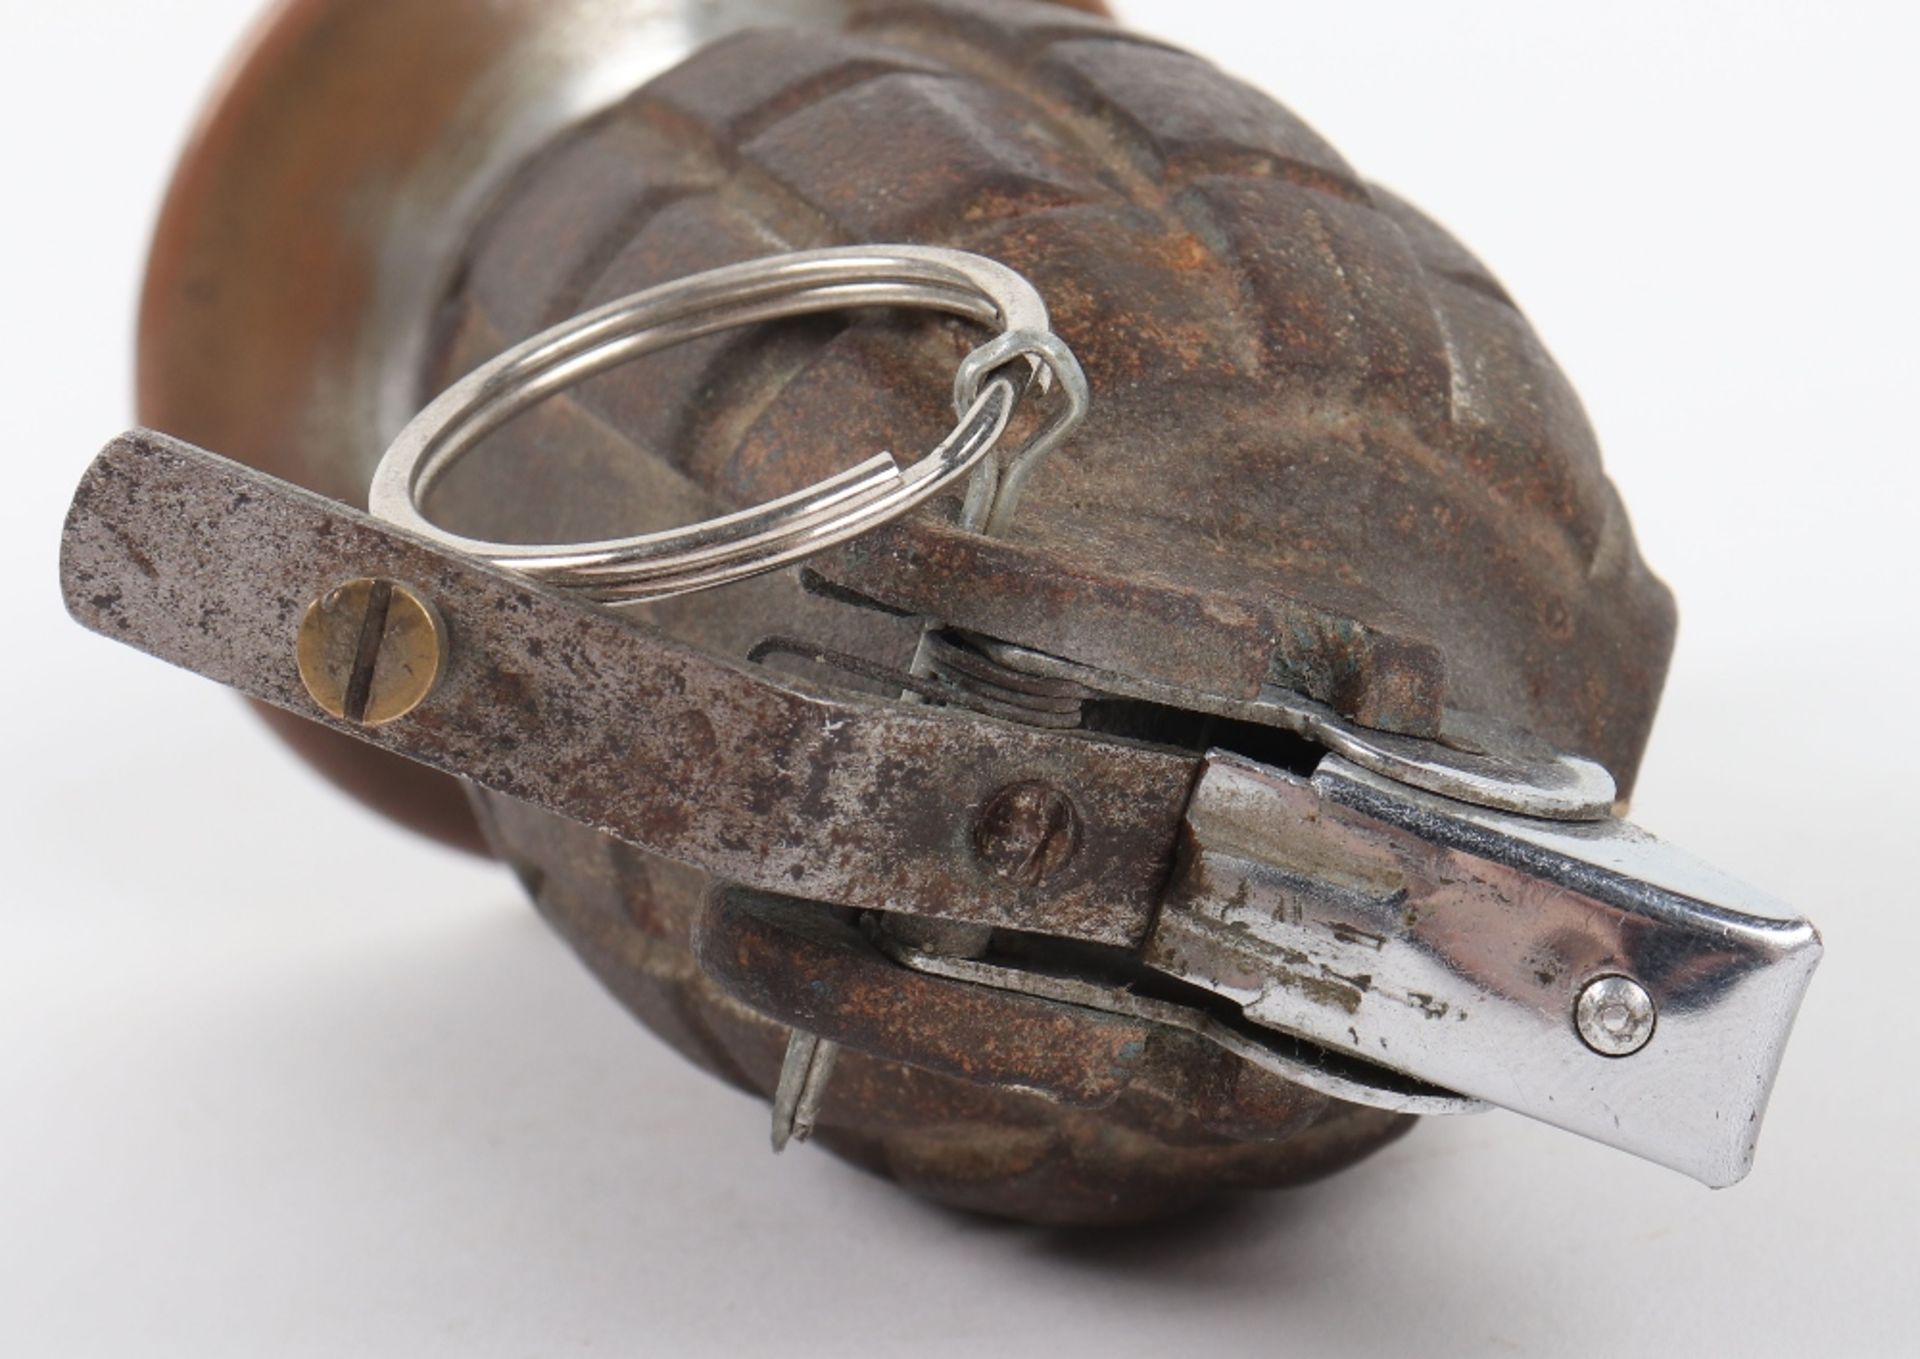 Inert British Mills Grenade Converted to Table Lighter - Image 5 of 6